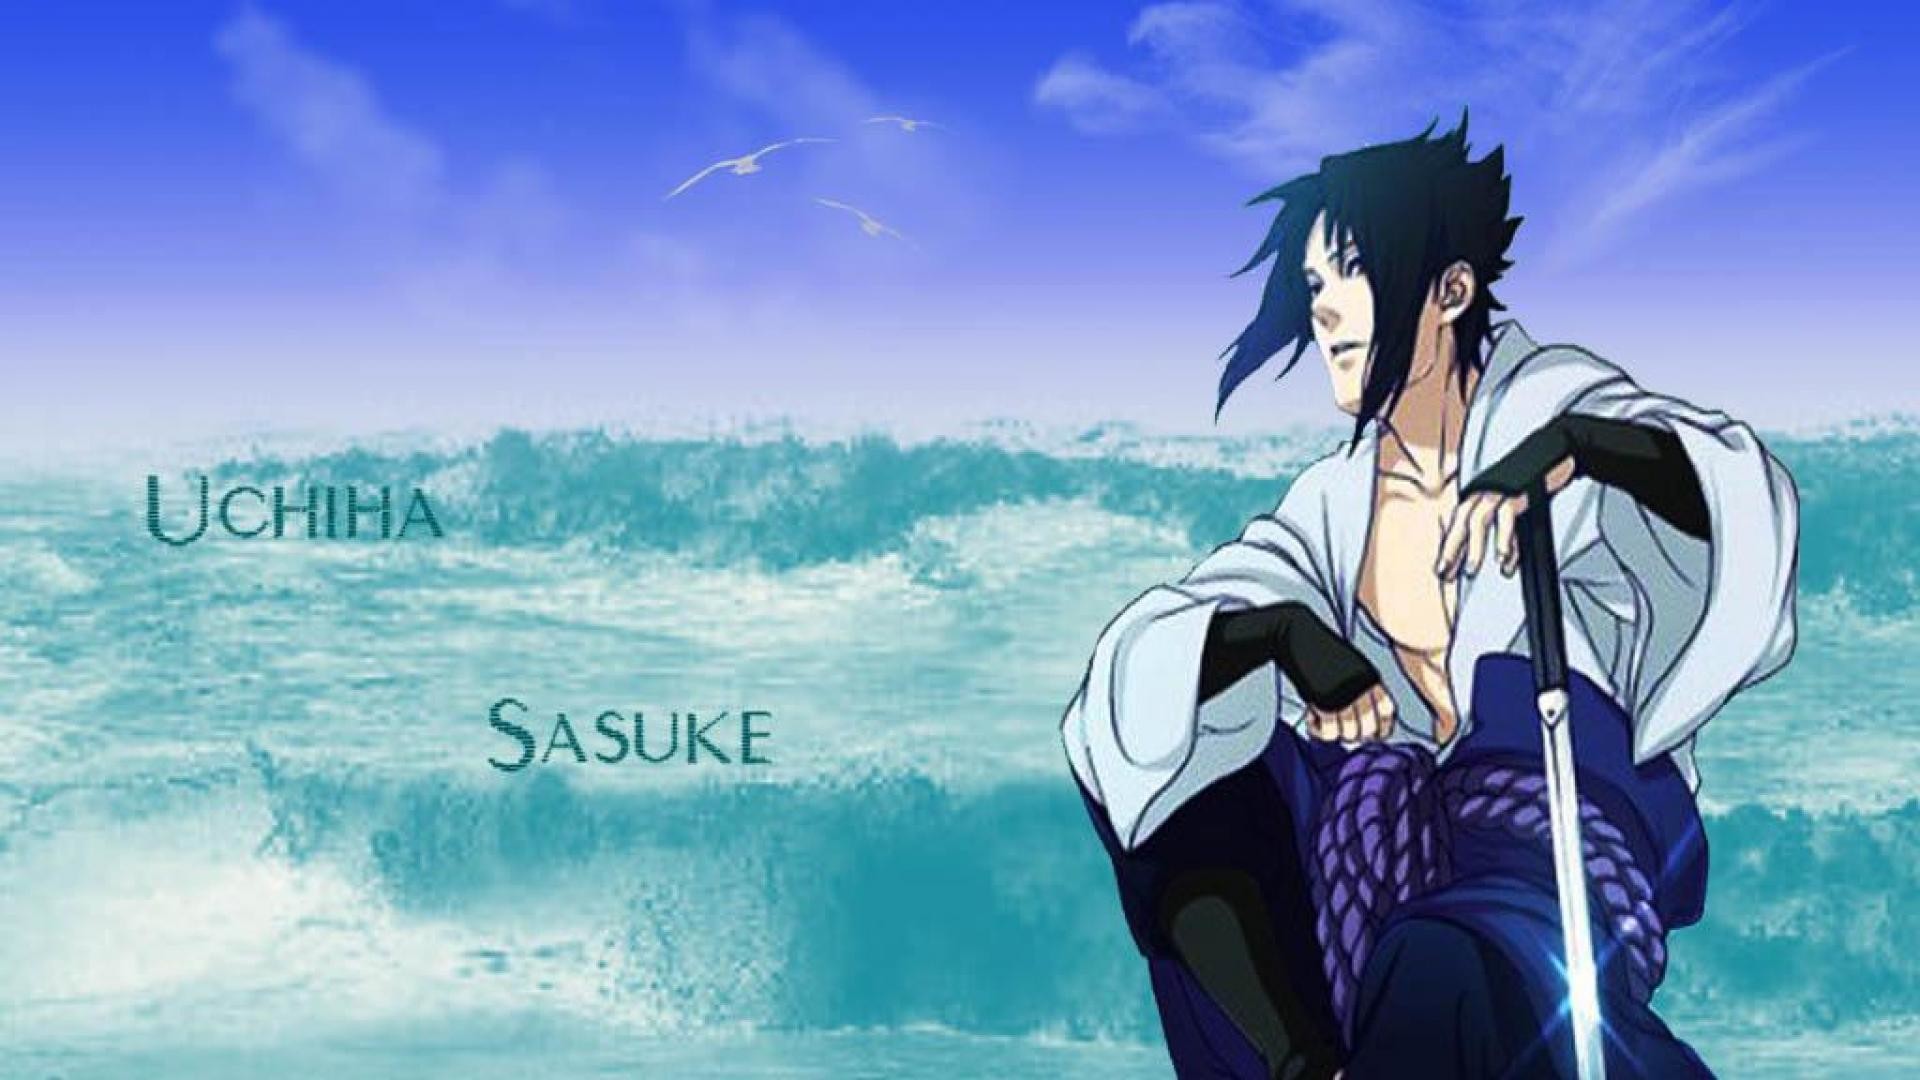 Sasuke Wallpapers HD | Wallpapers, Backgrounds, Images, Art Photos.